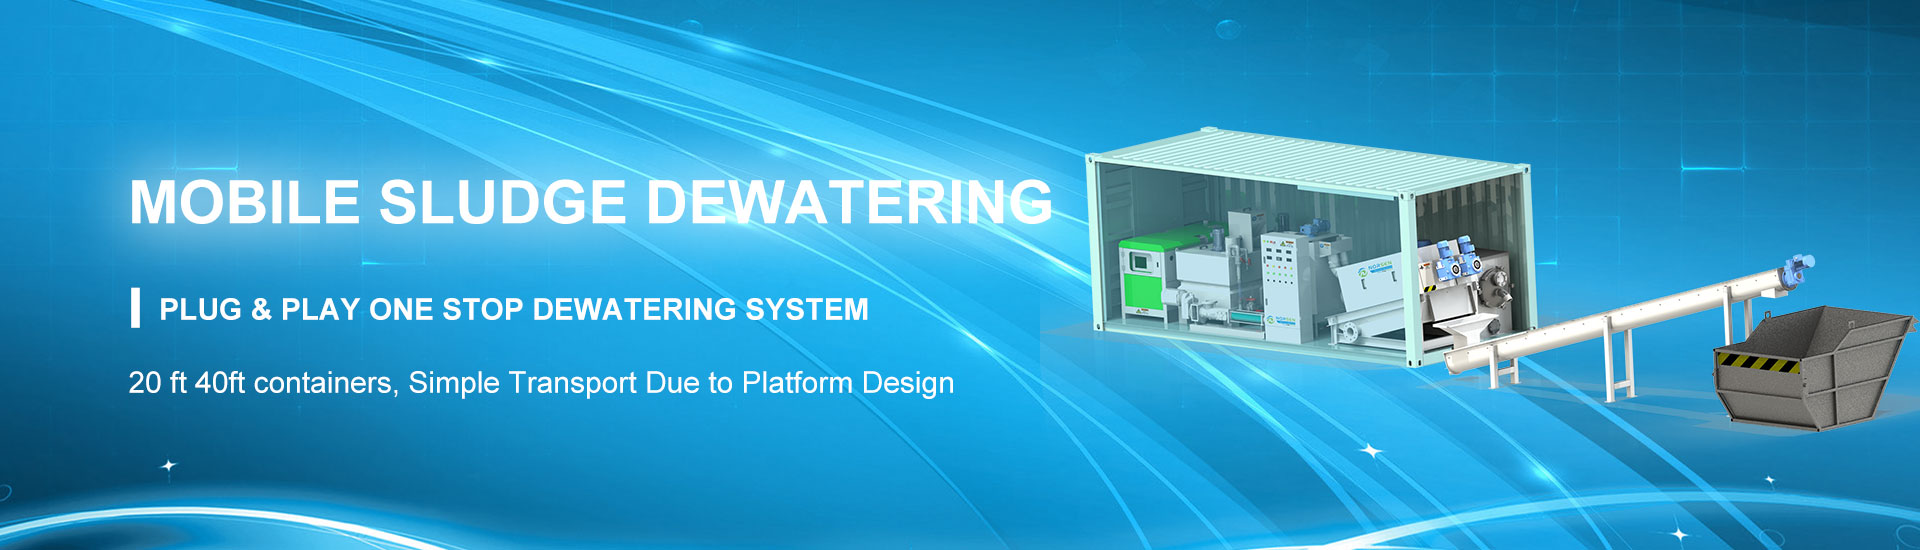 Mobile Sludge Dewatering System